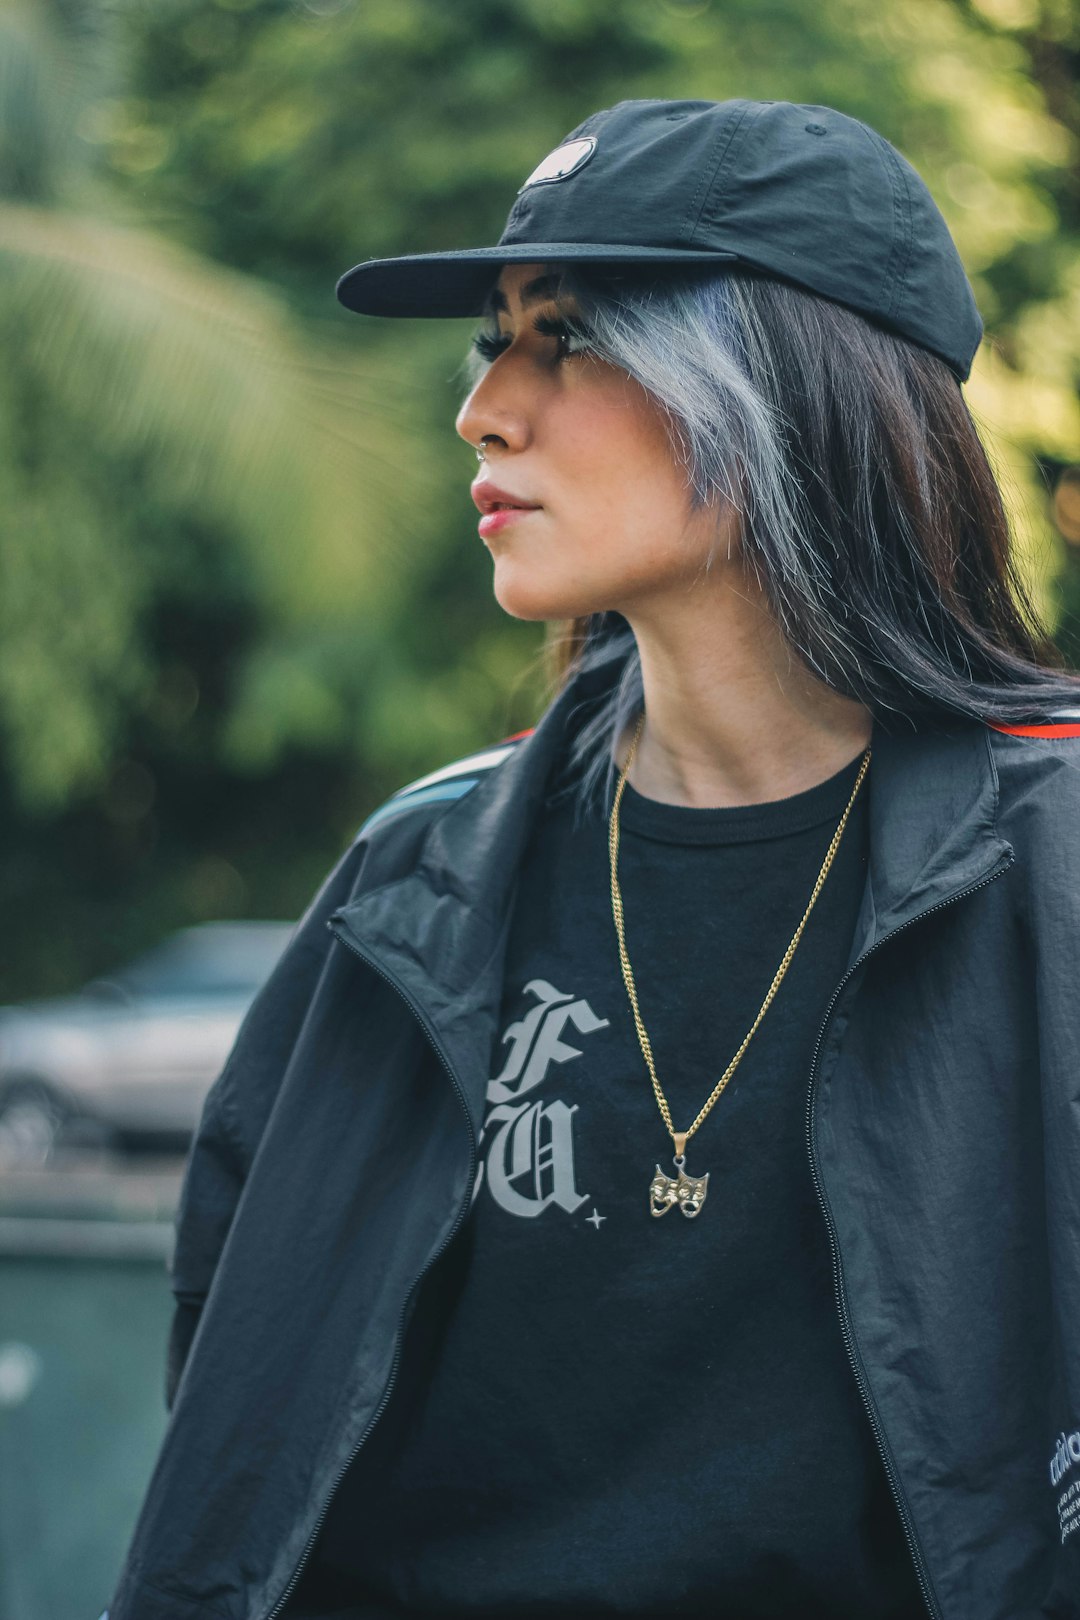 woman in black leather jacket wearing black cap